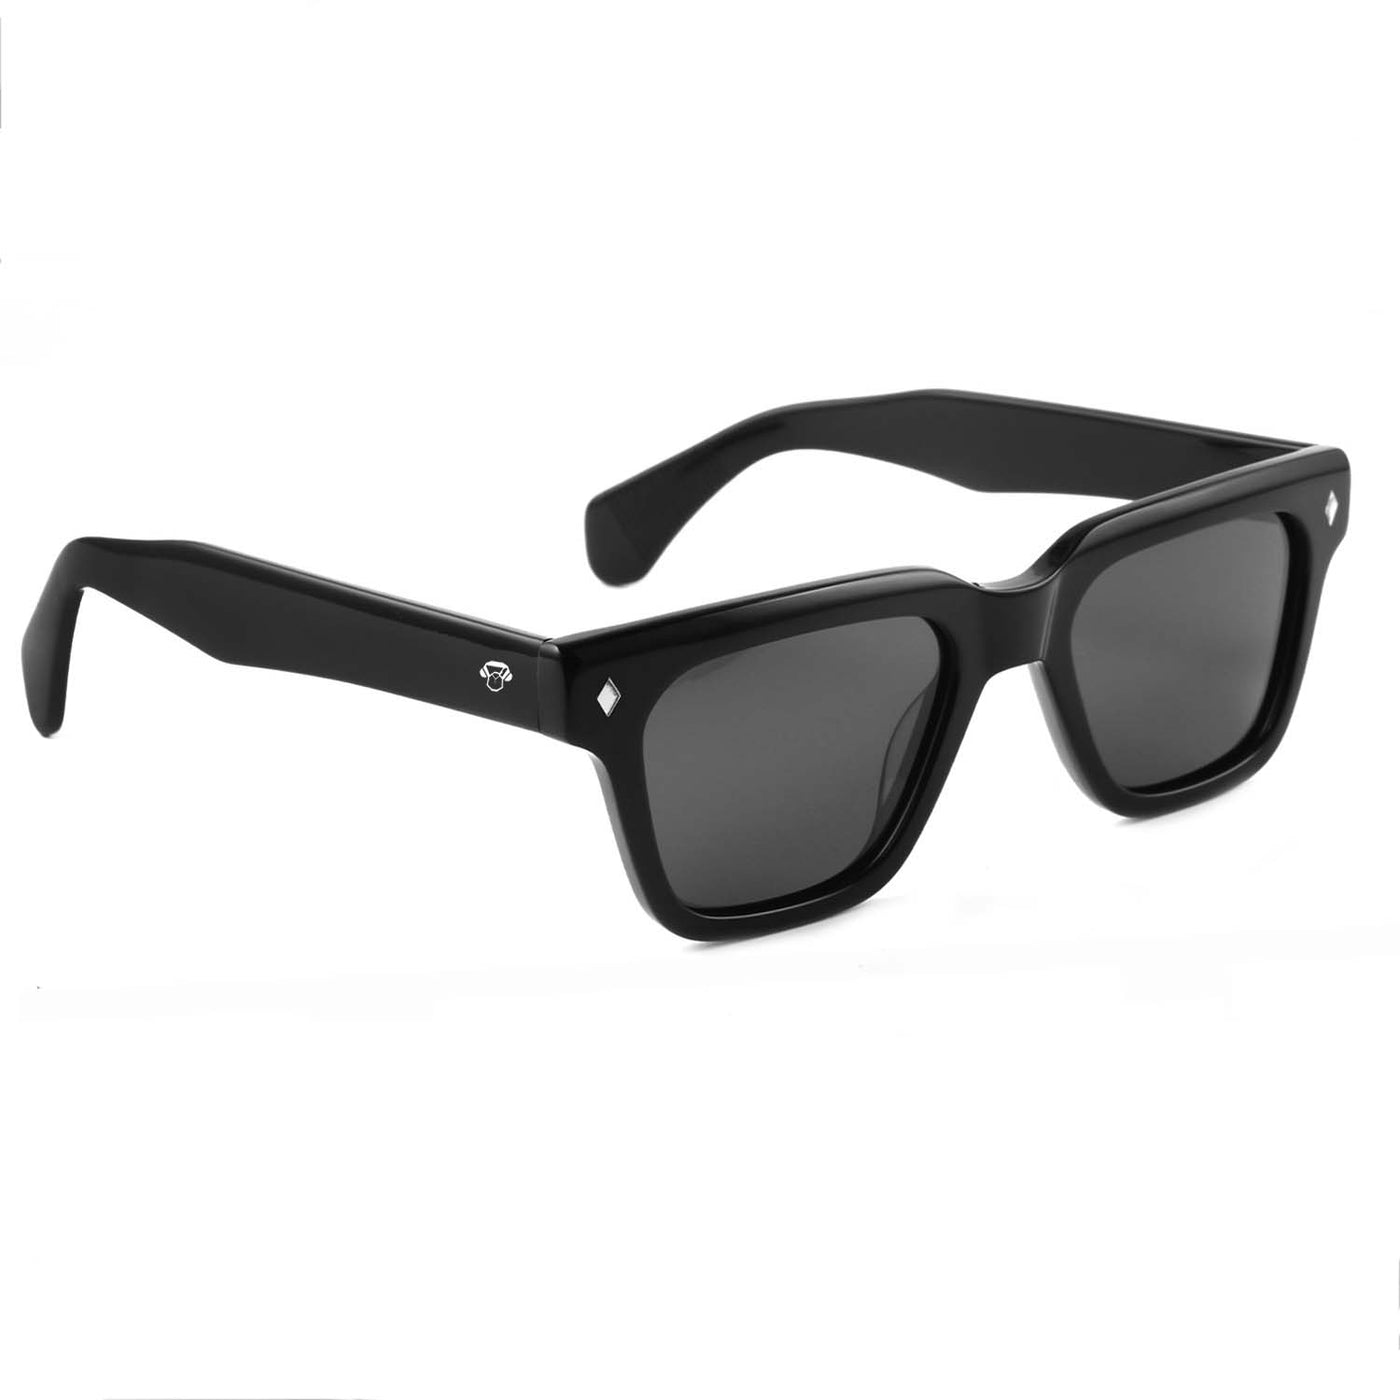 anteojos de sol cuadradados rectangulares polarizados de color negro para hombre y mujer de cara redonda de moda